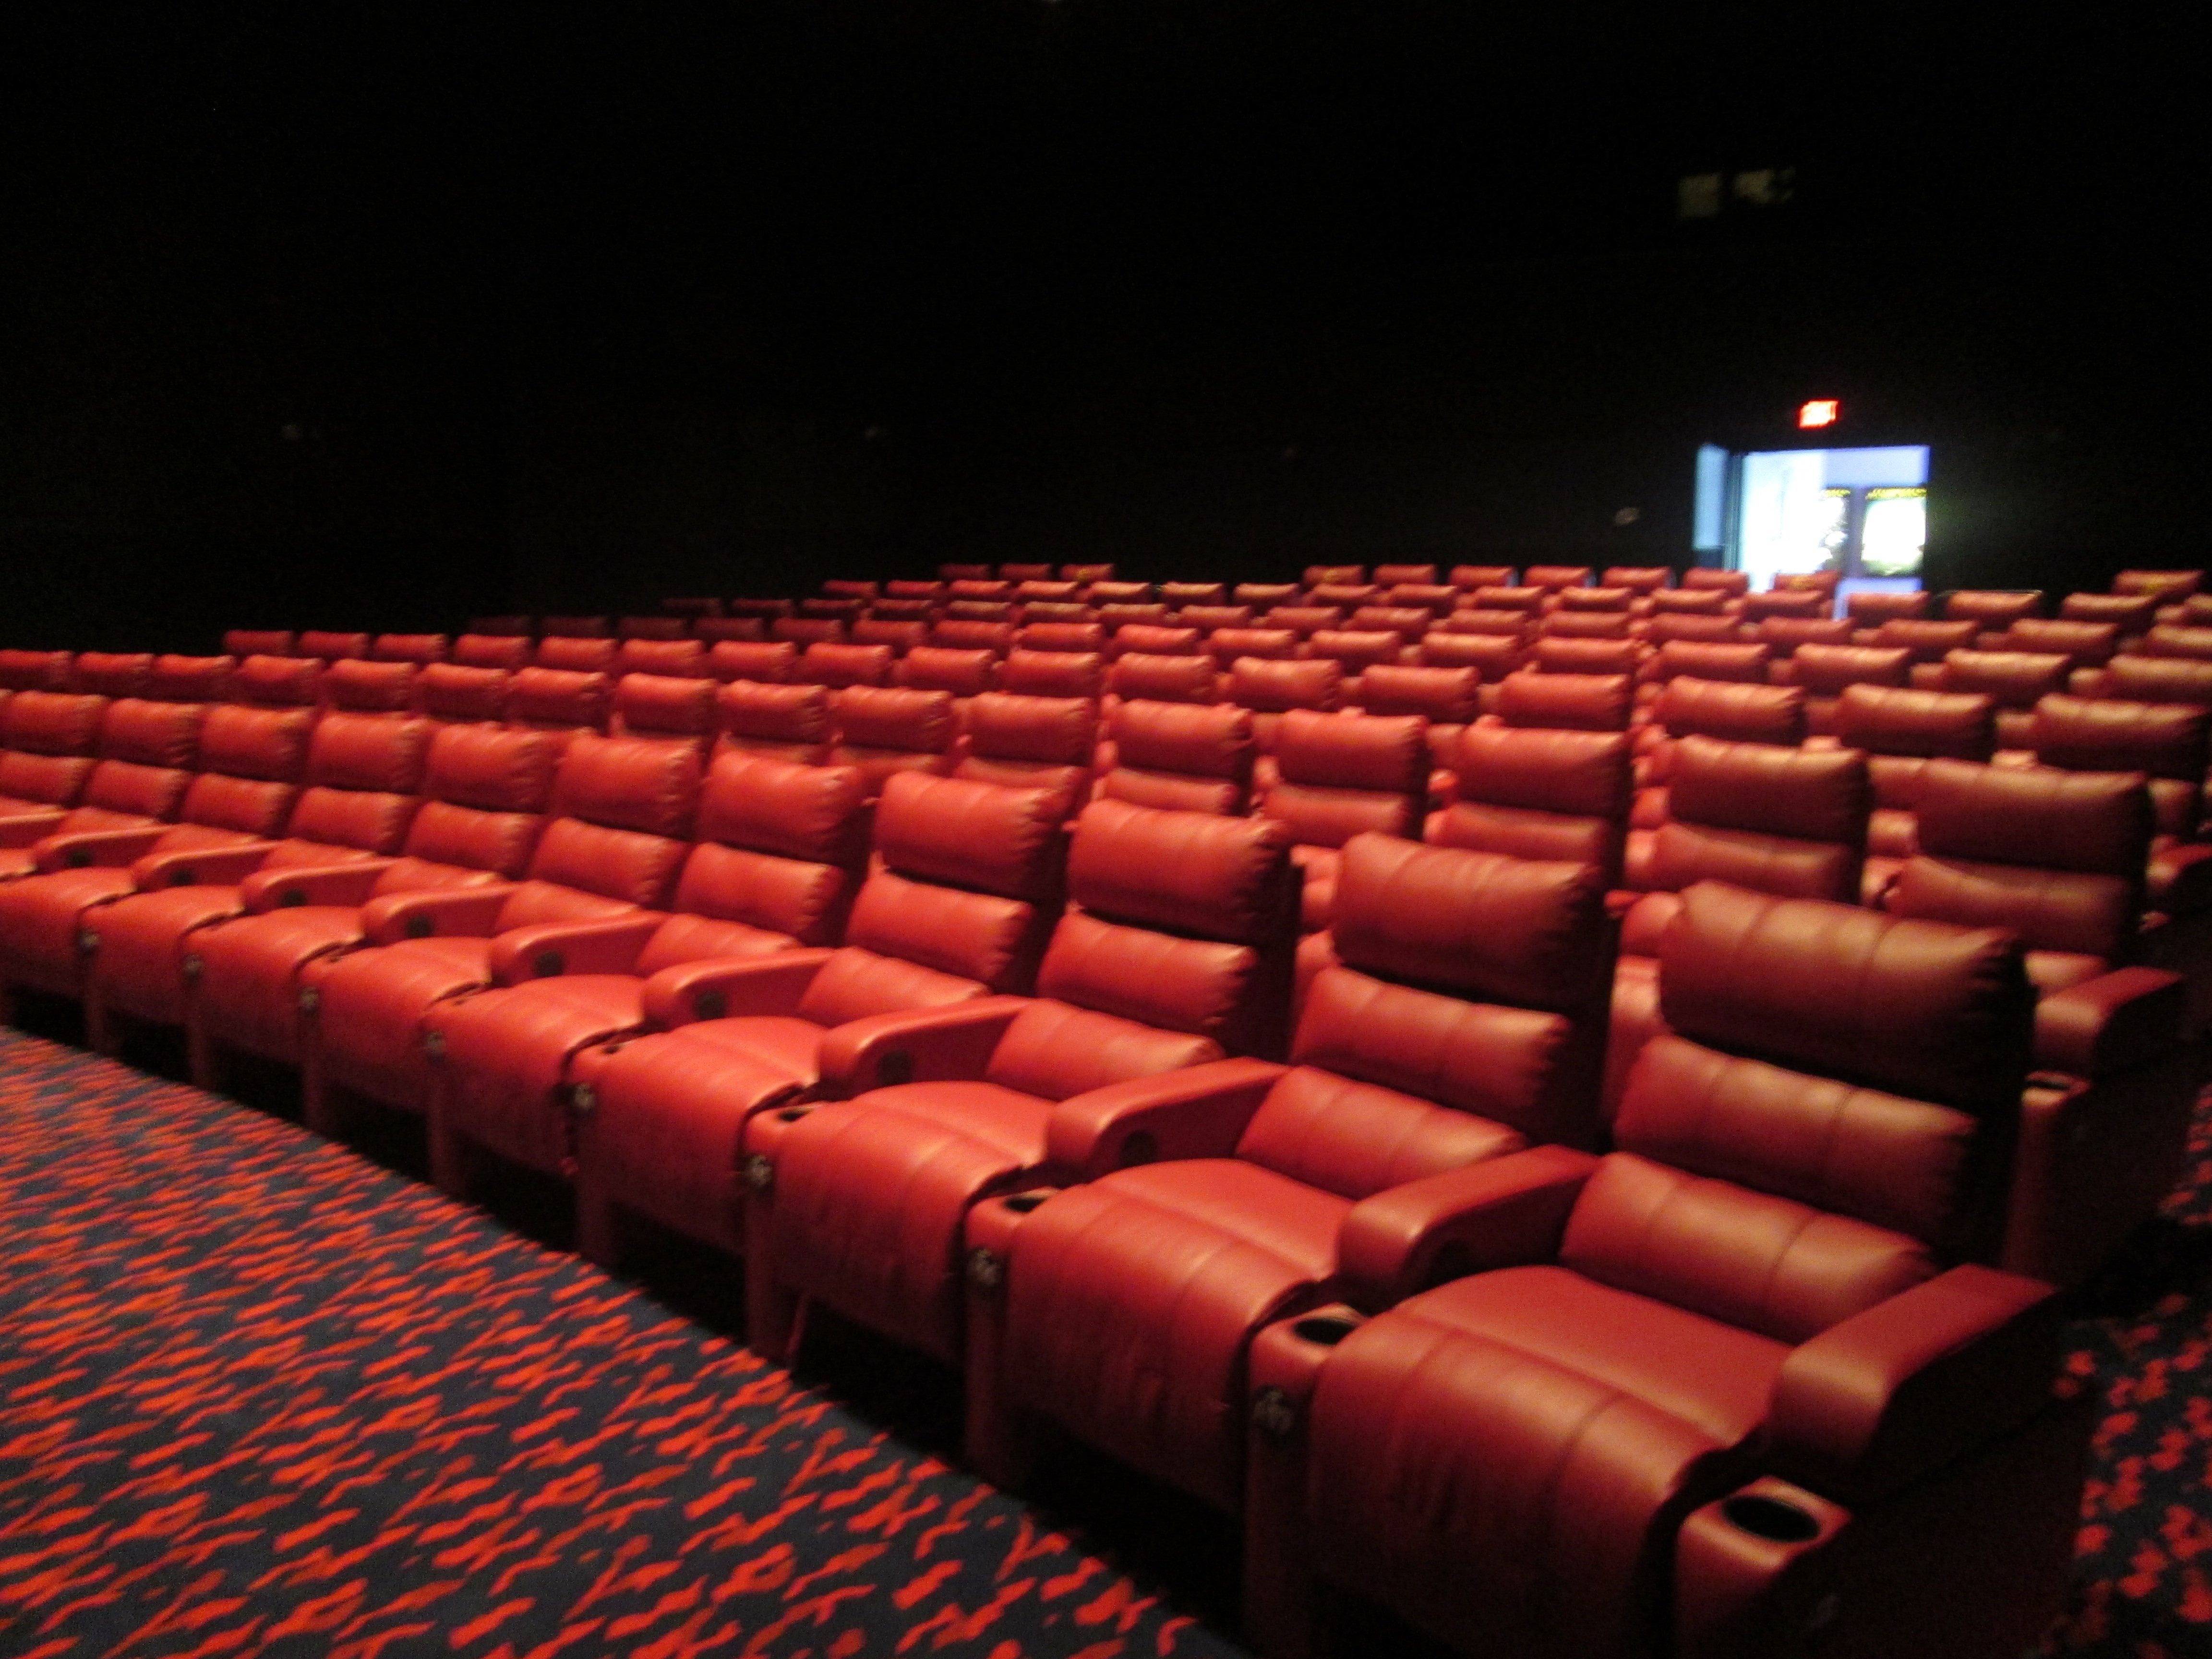 Fox Sun & Surf Cinema Debuts Enhanced Movie Experience